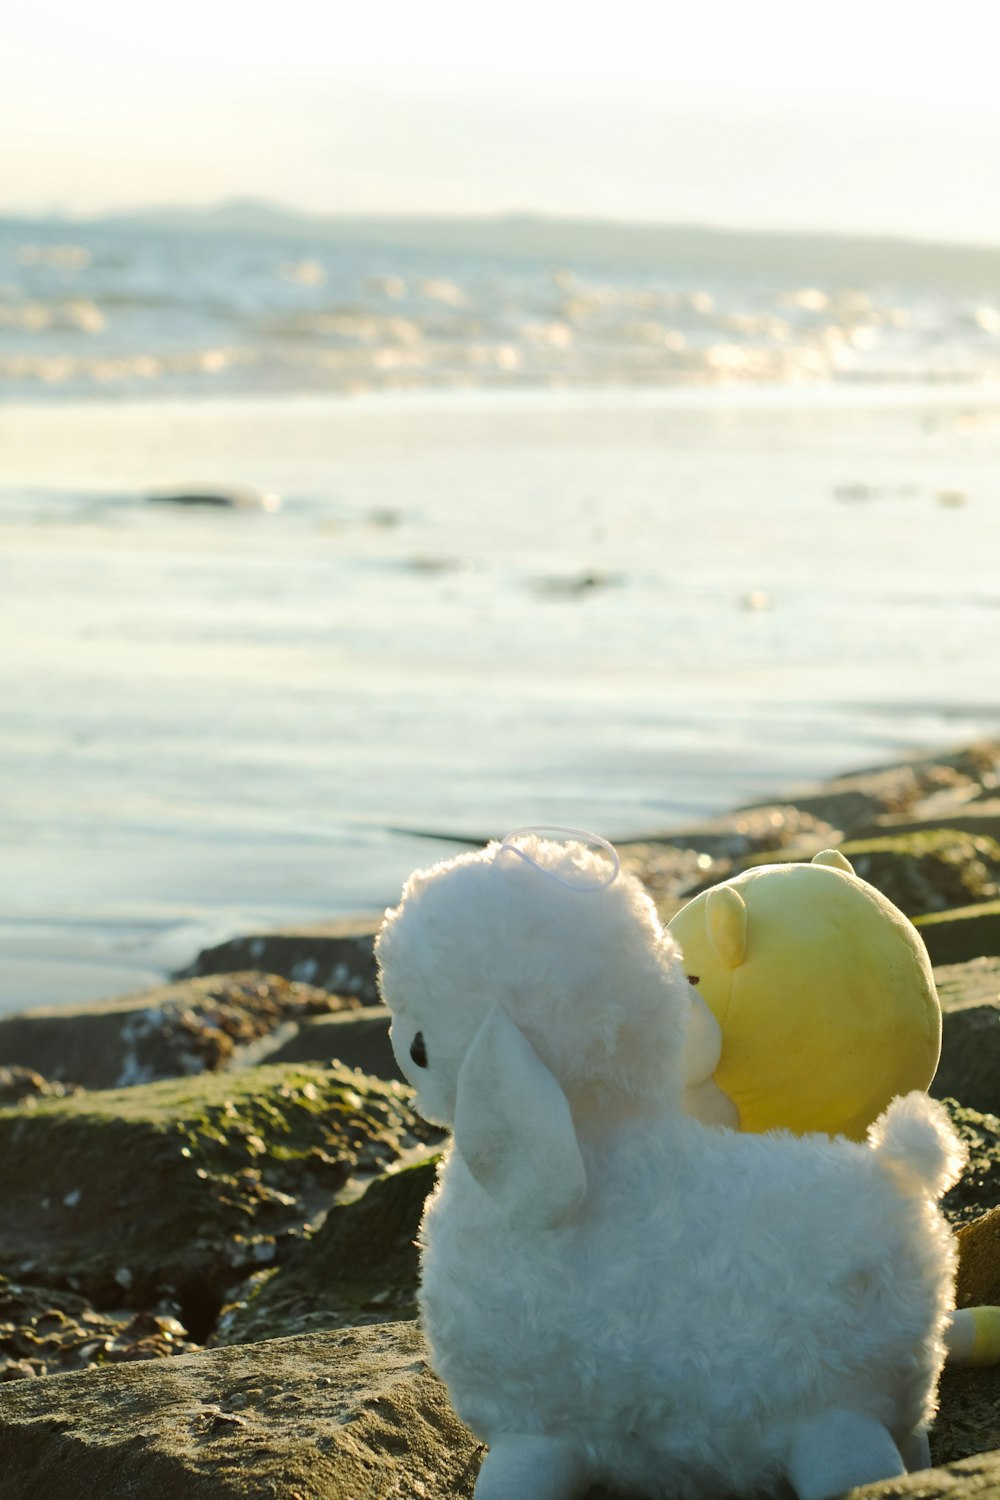 a white stuffed animal sitting on top of a sandy beach